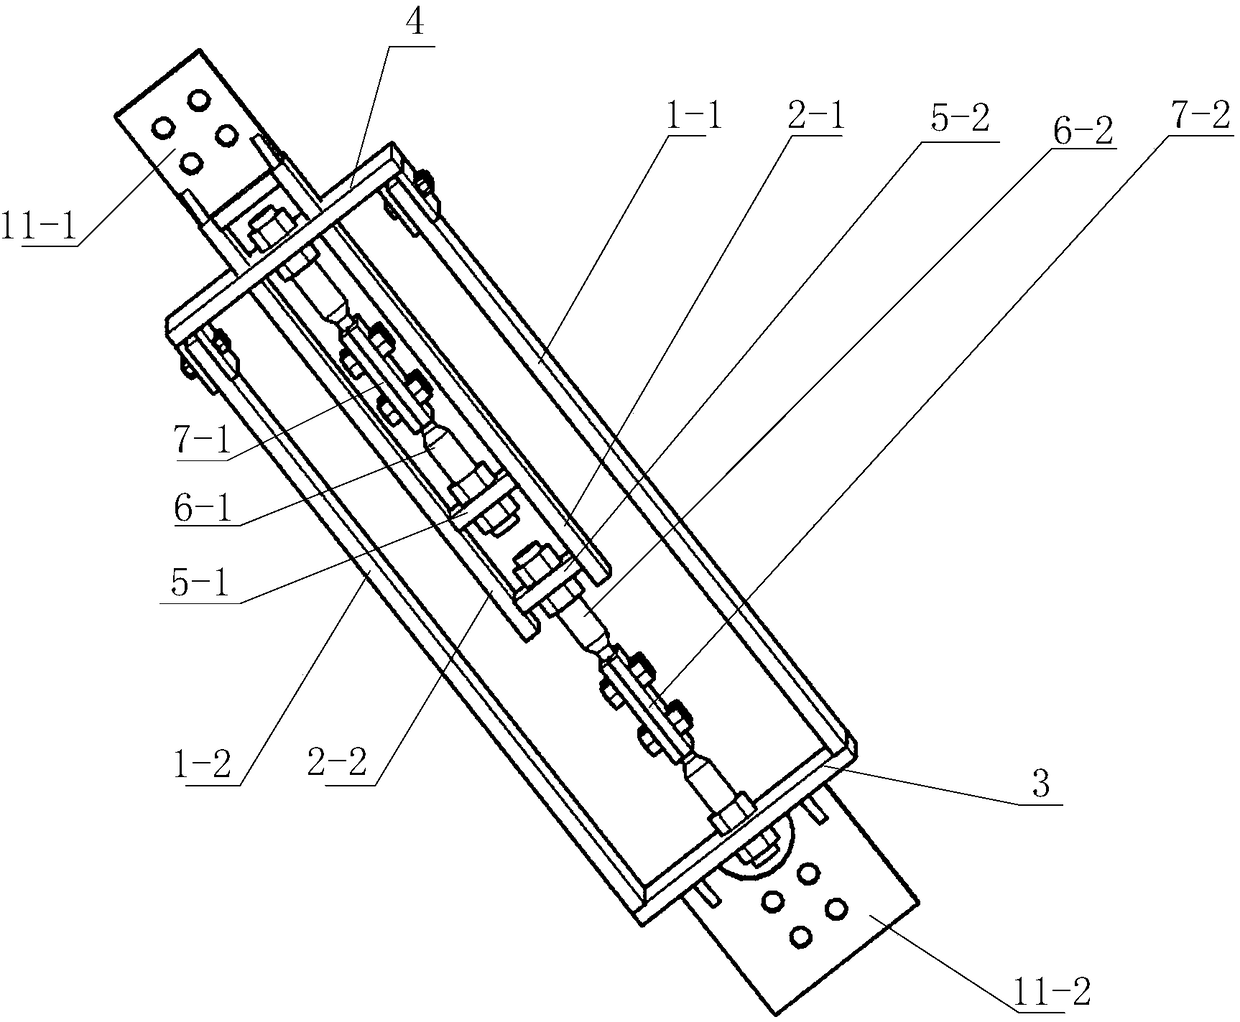 Buckling-restrained shape memory alloy rod based self-reset damper